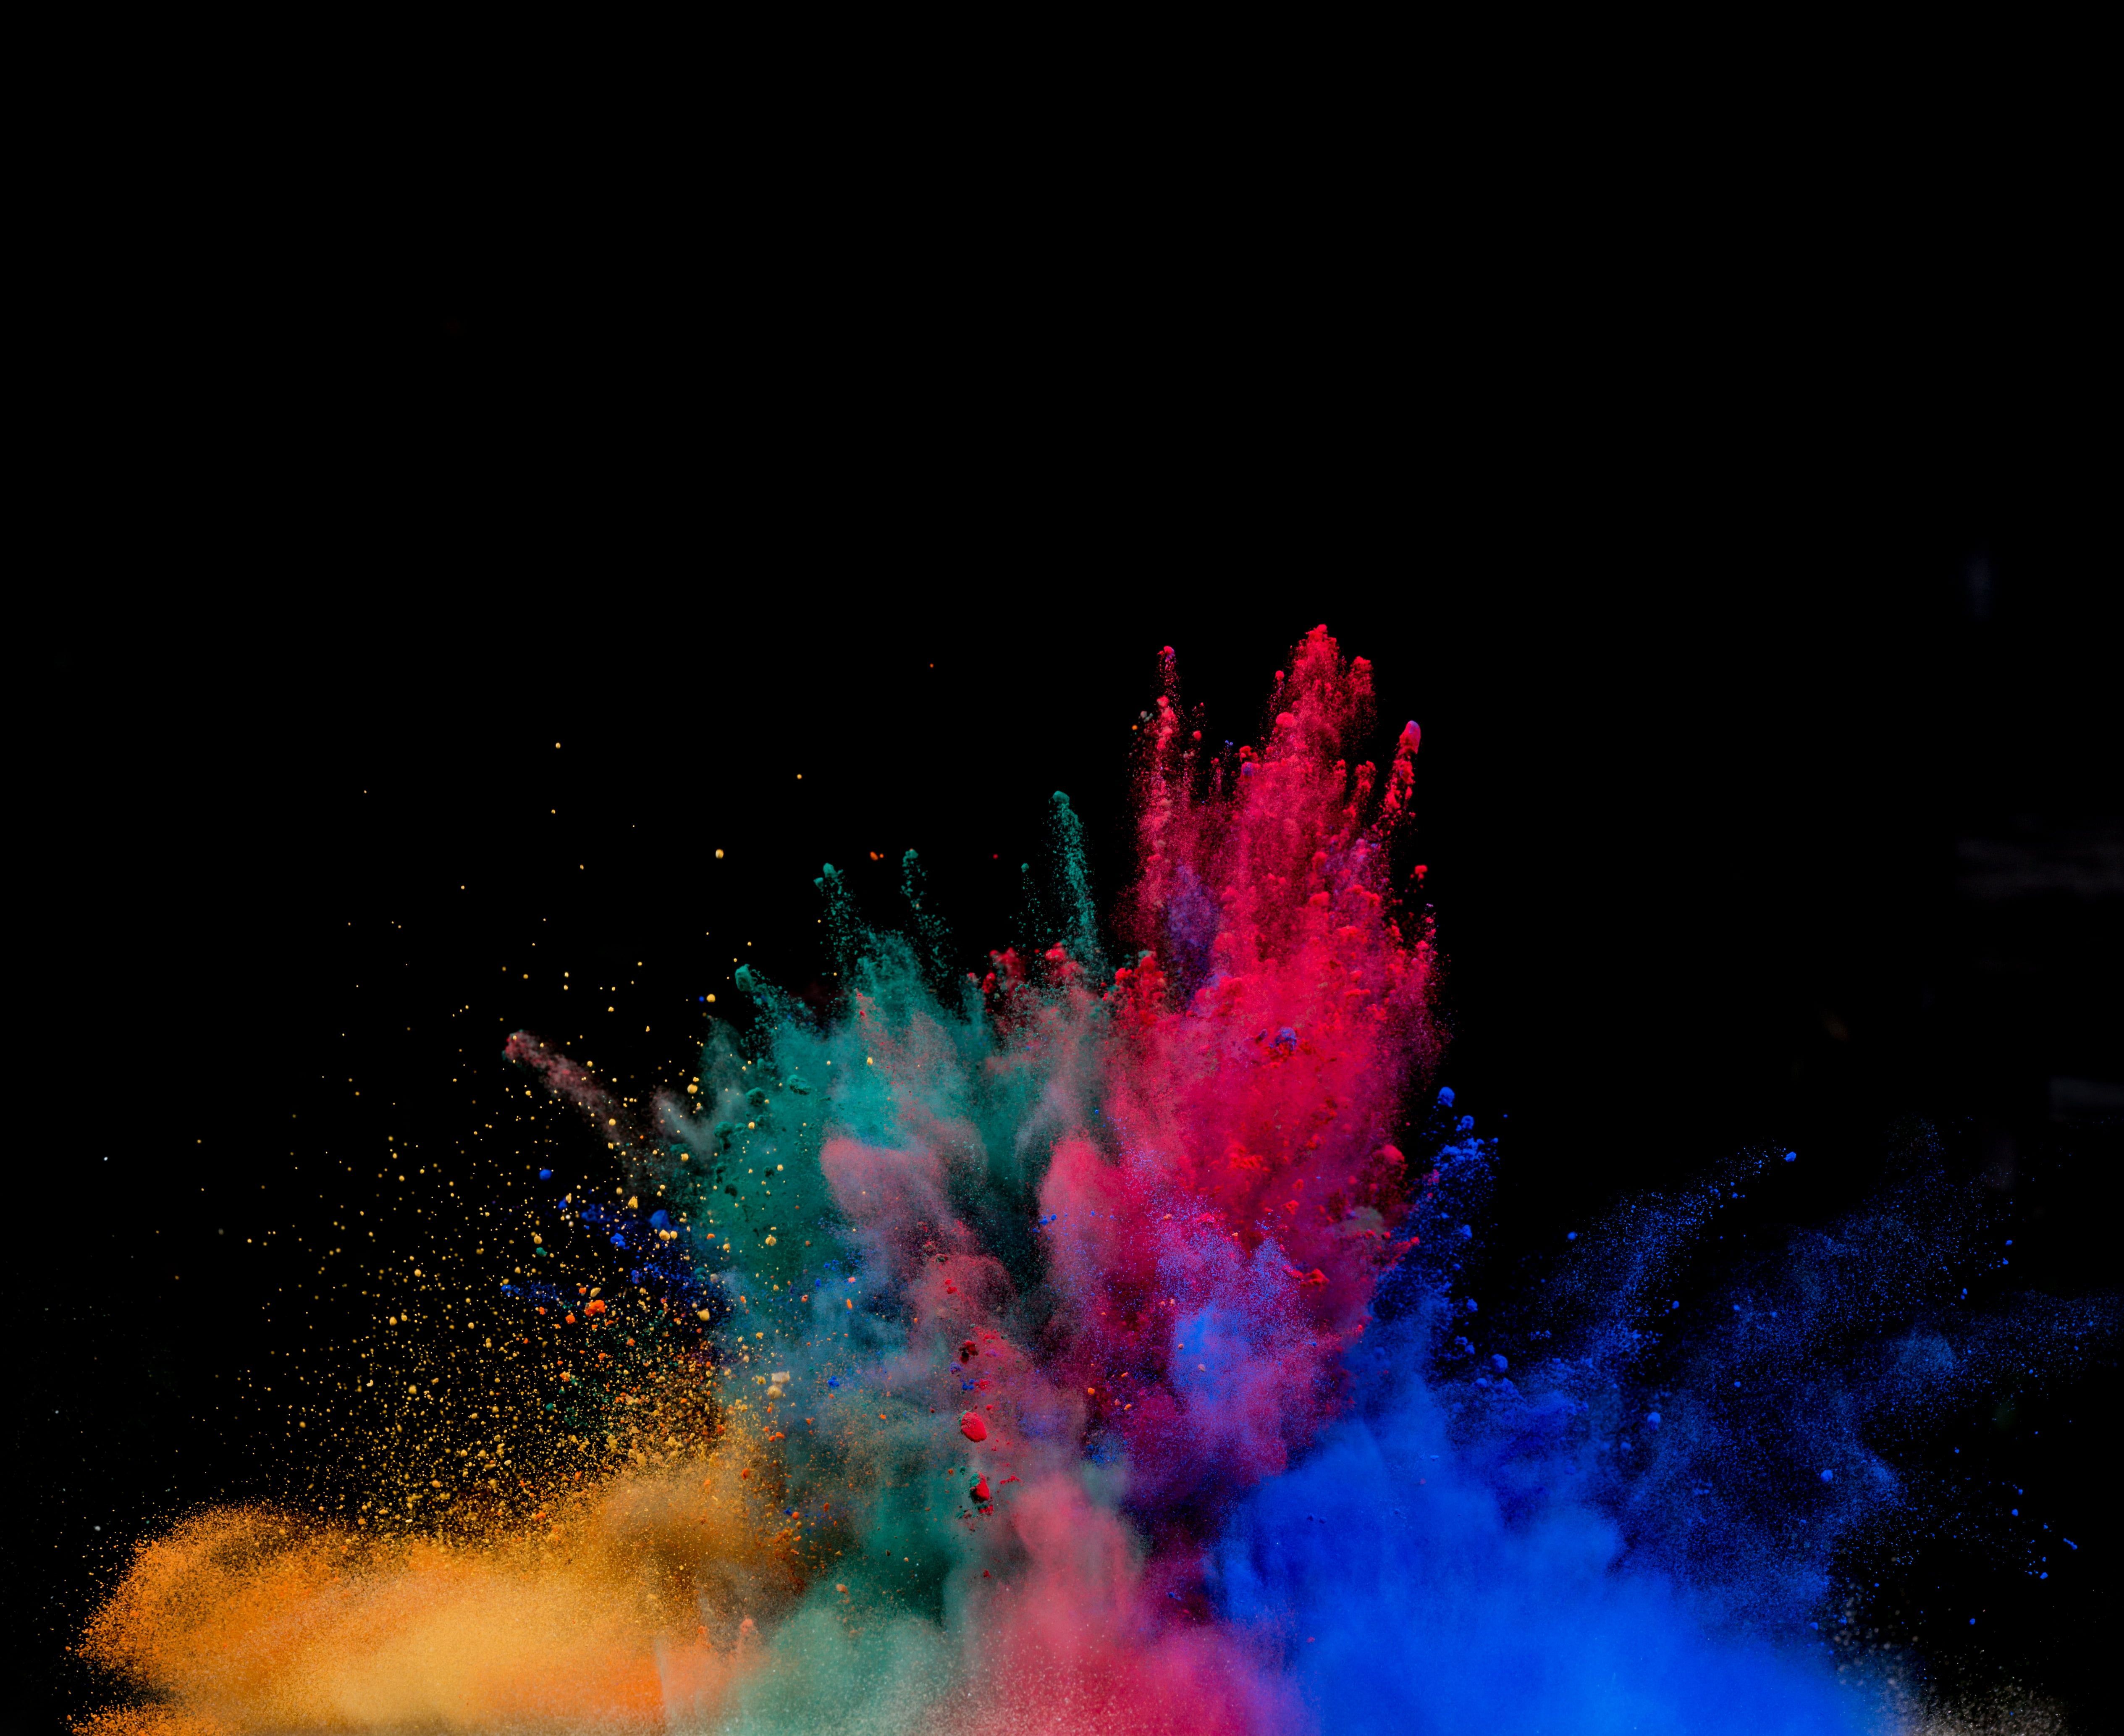 multicolored Holi powders powder explosion #powder #colorful K #wallpaper #hdwallpaper #desktop. Colorful wallpaper, Motion wallpaper, Galaxy phone wallpaper